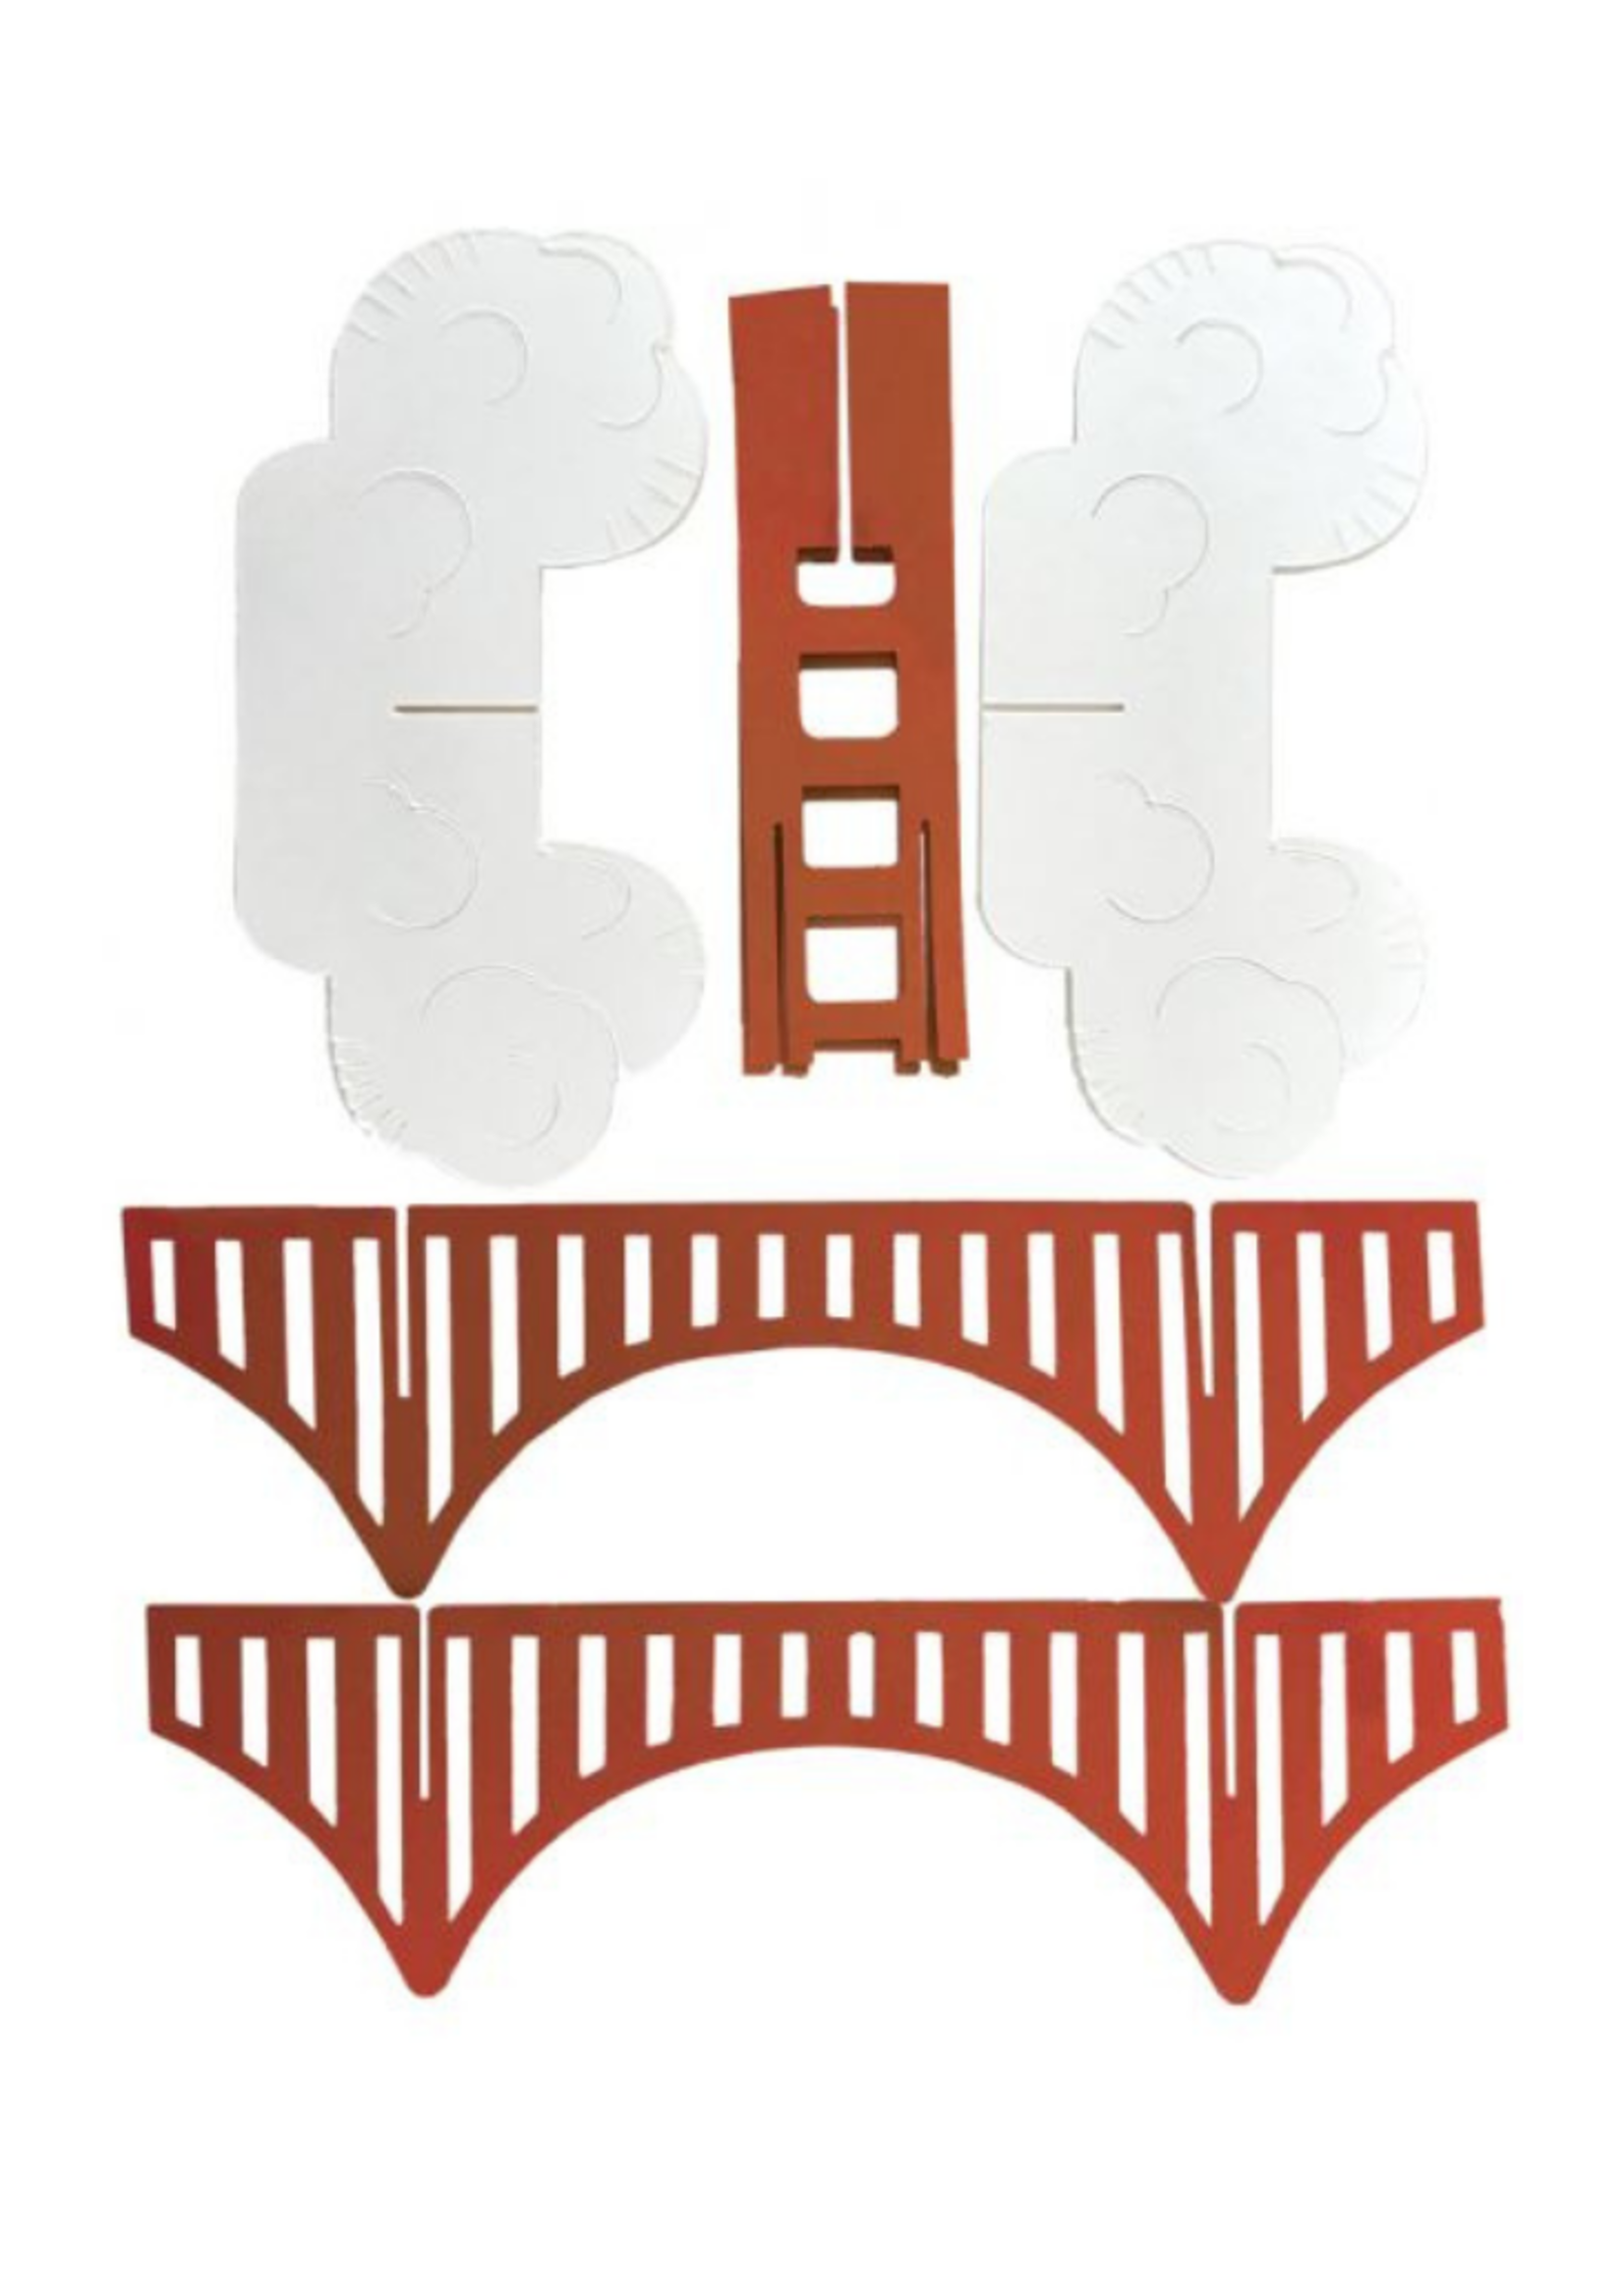 Copernicus Toys Crystal Growing Golden Gate Bridge